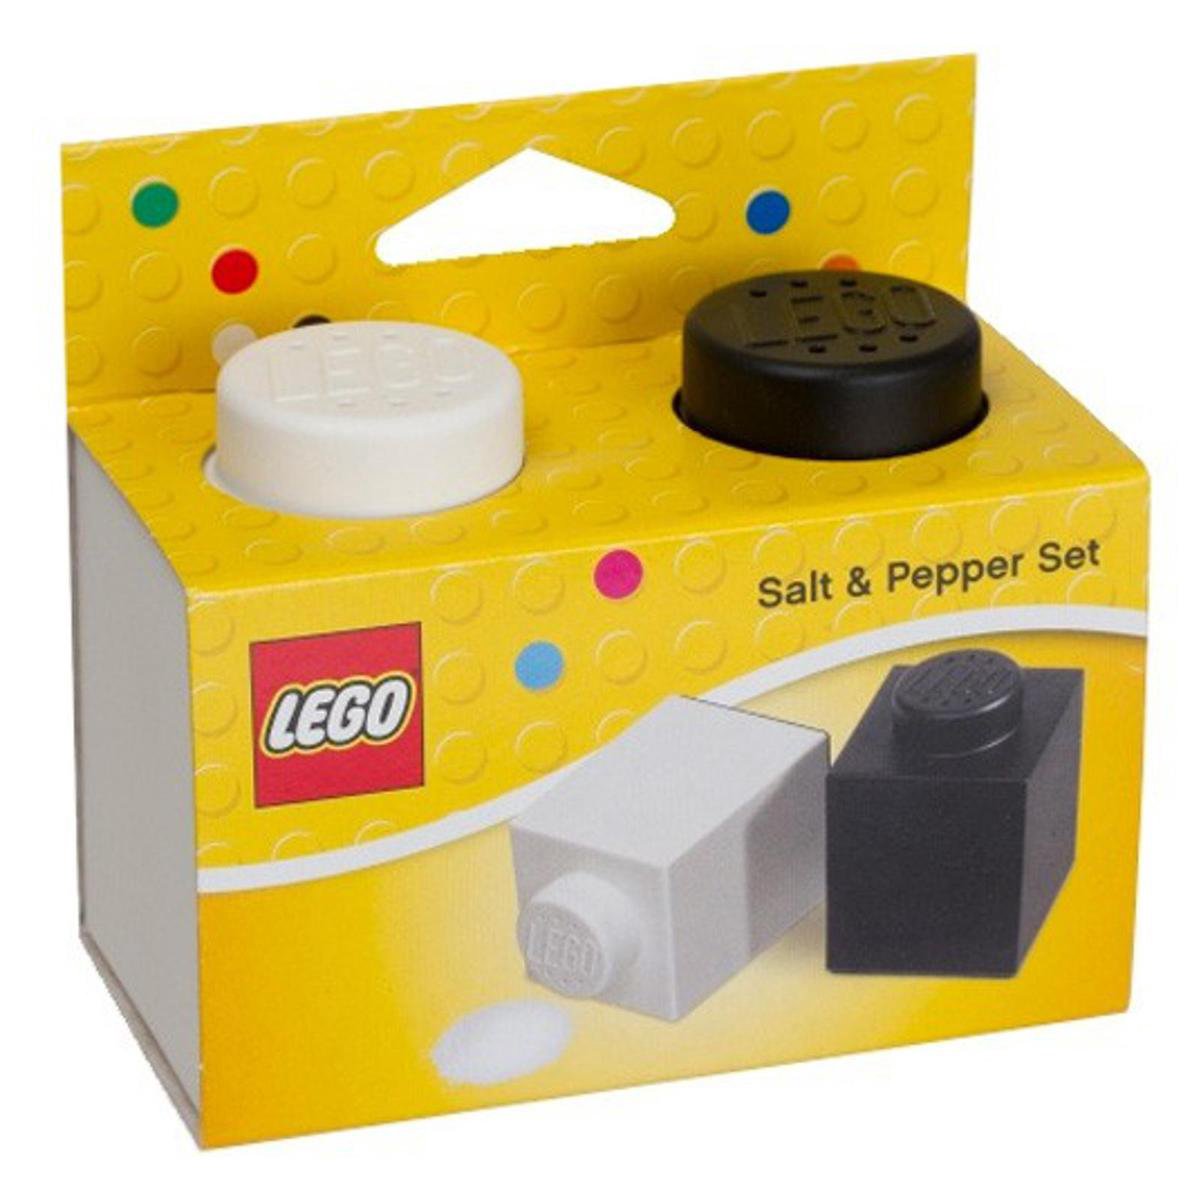 bevestig alstublieft moe Komkommer LEGO Zout en Peper set 850705 | bol.com